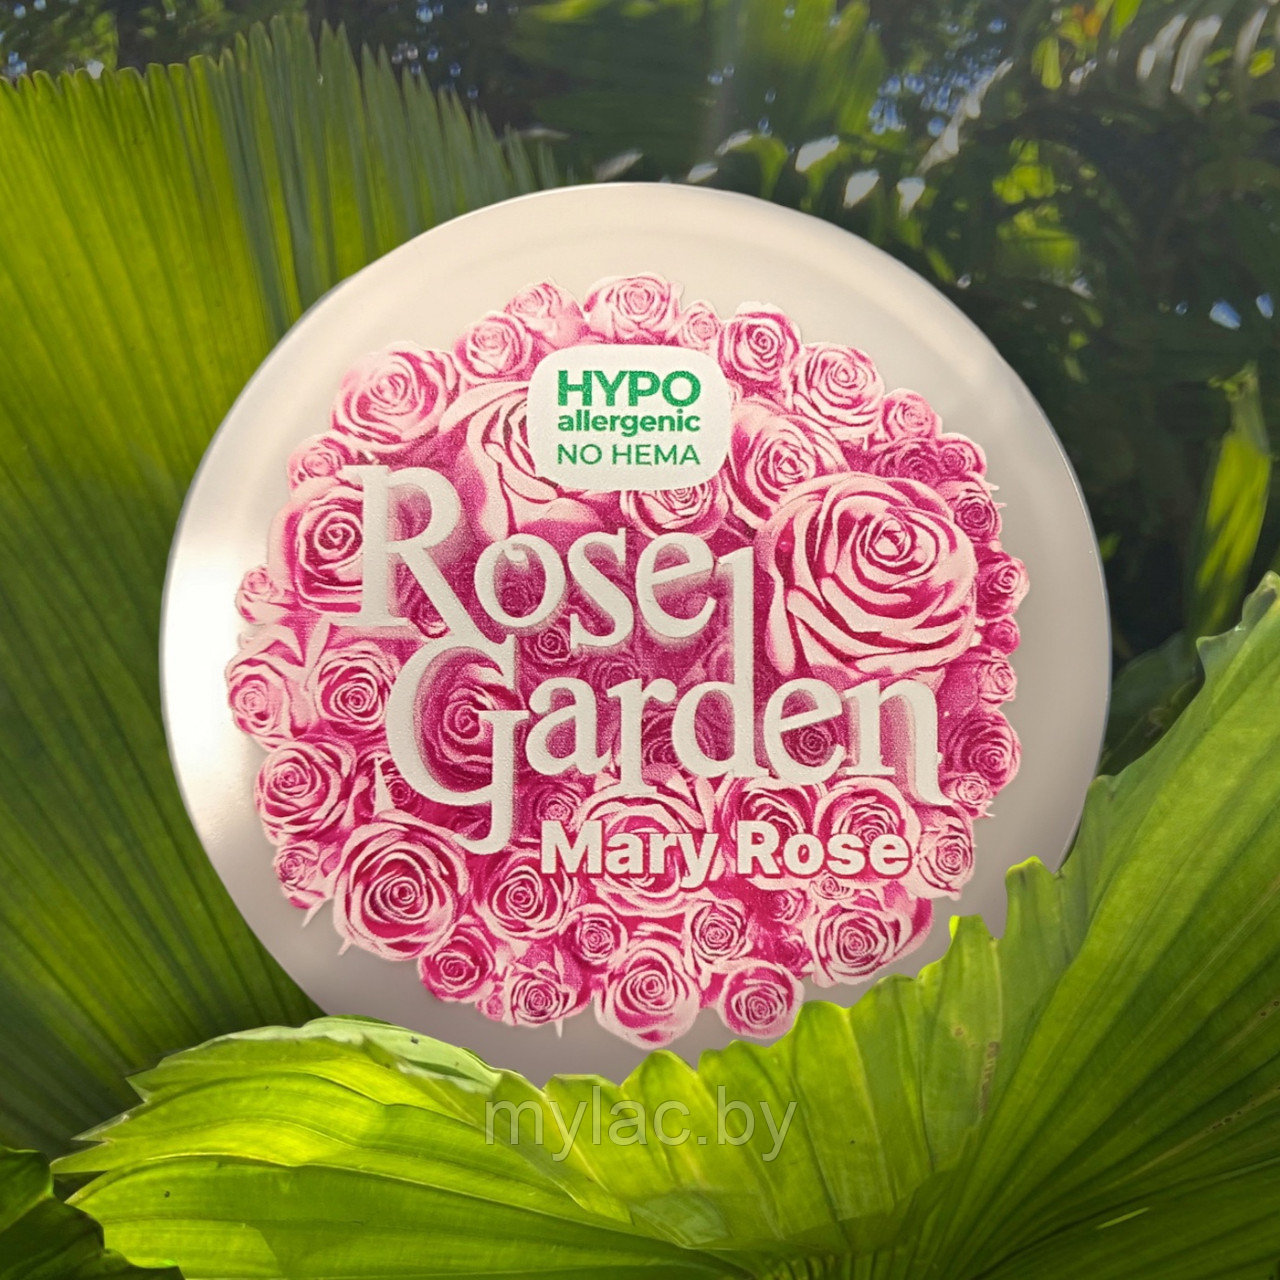 Гель CosmoGel HEMA FREE ROSE GARDEN Mary Rose, 50 мл.